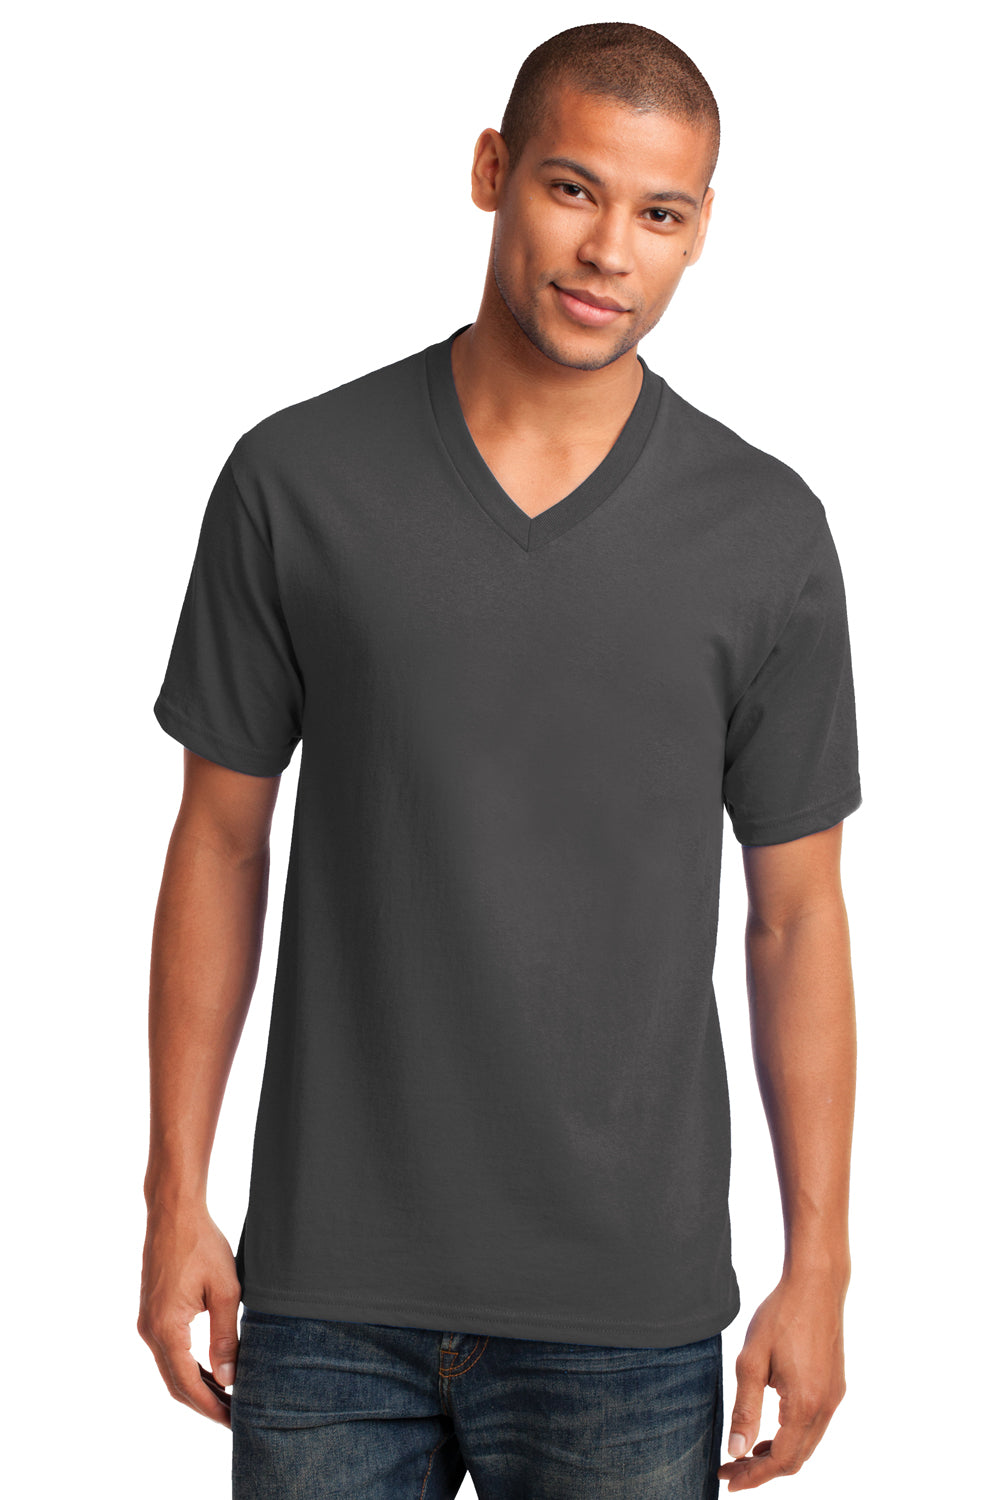 Port & Company PC54V Mens Core Short Sleeve V-Neck T-Shirt Charcoal Grey Front